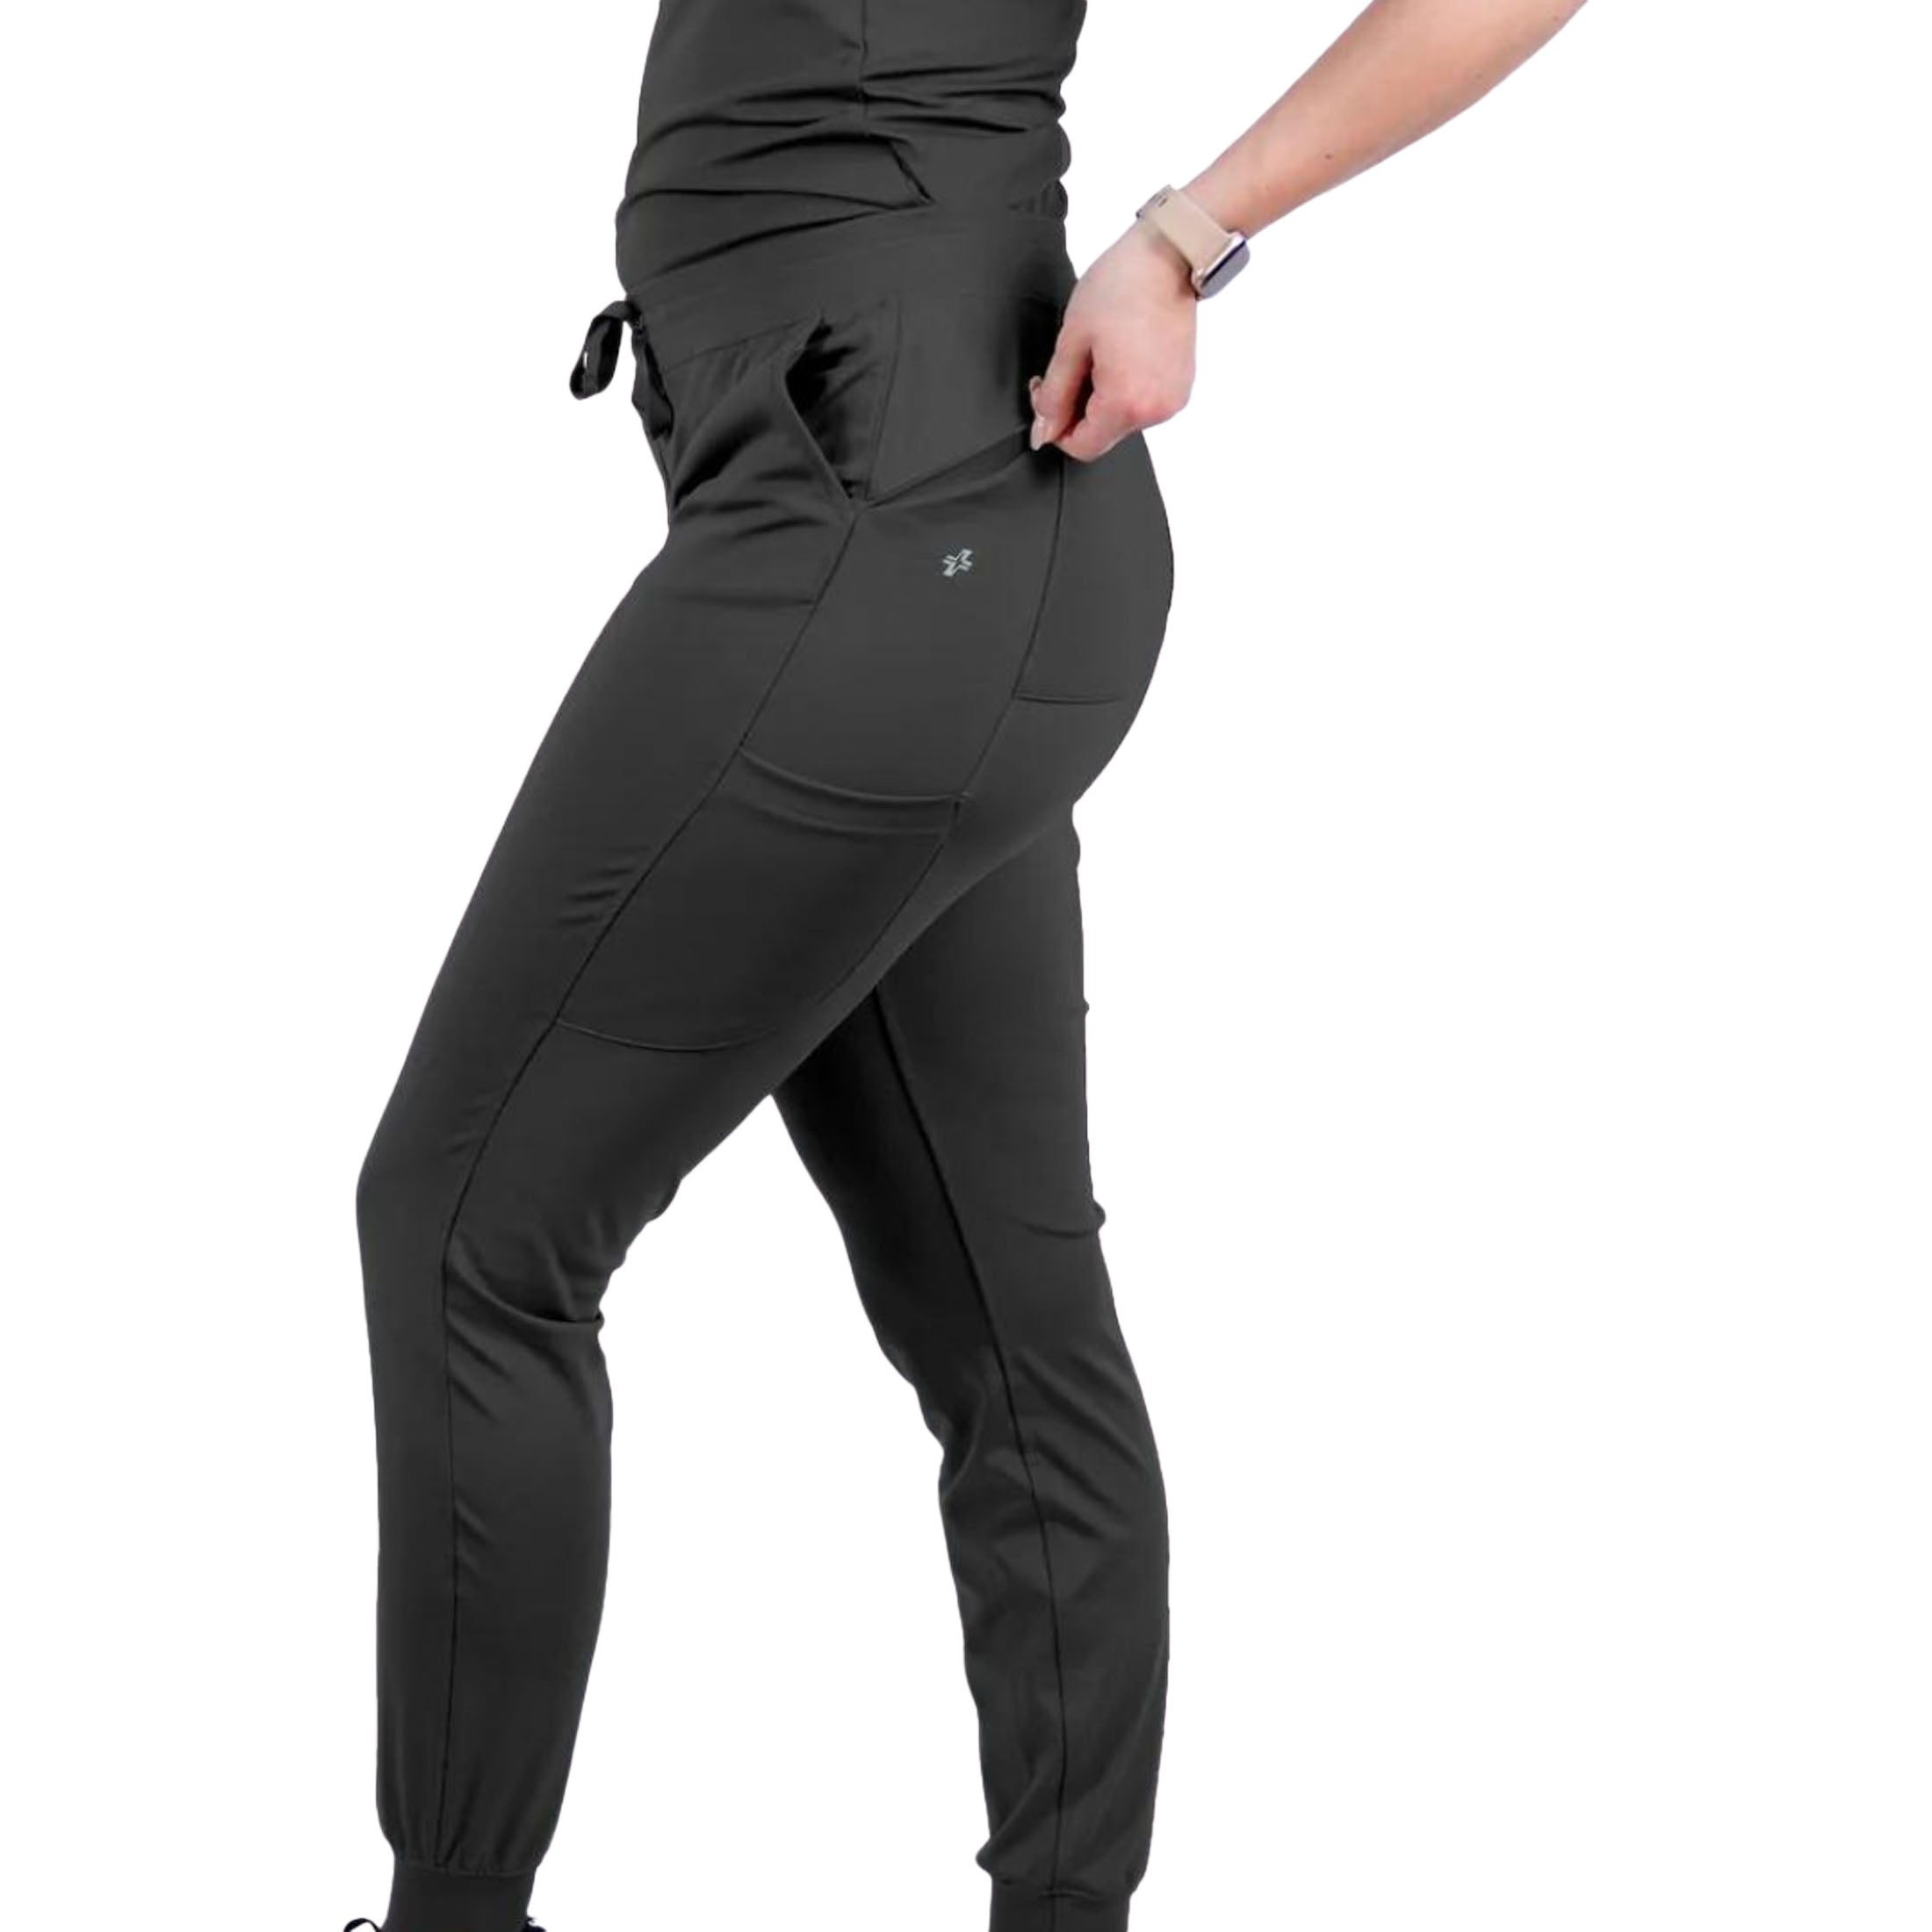 BM elastic waist cargo pants - Women